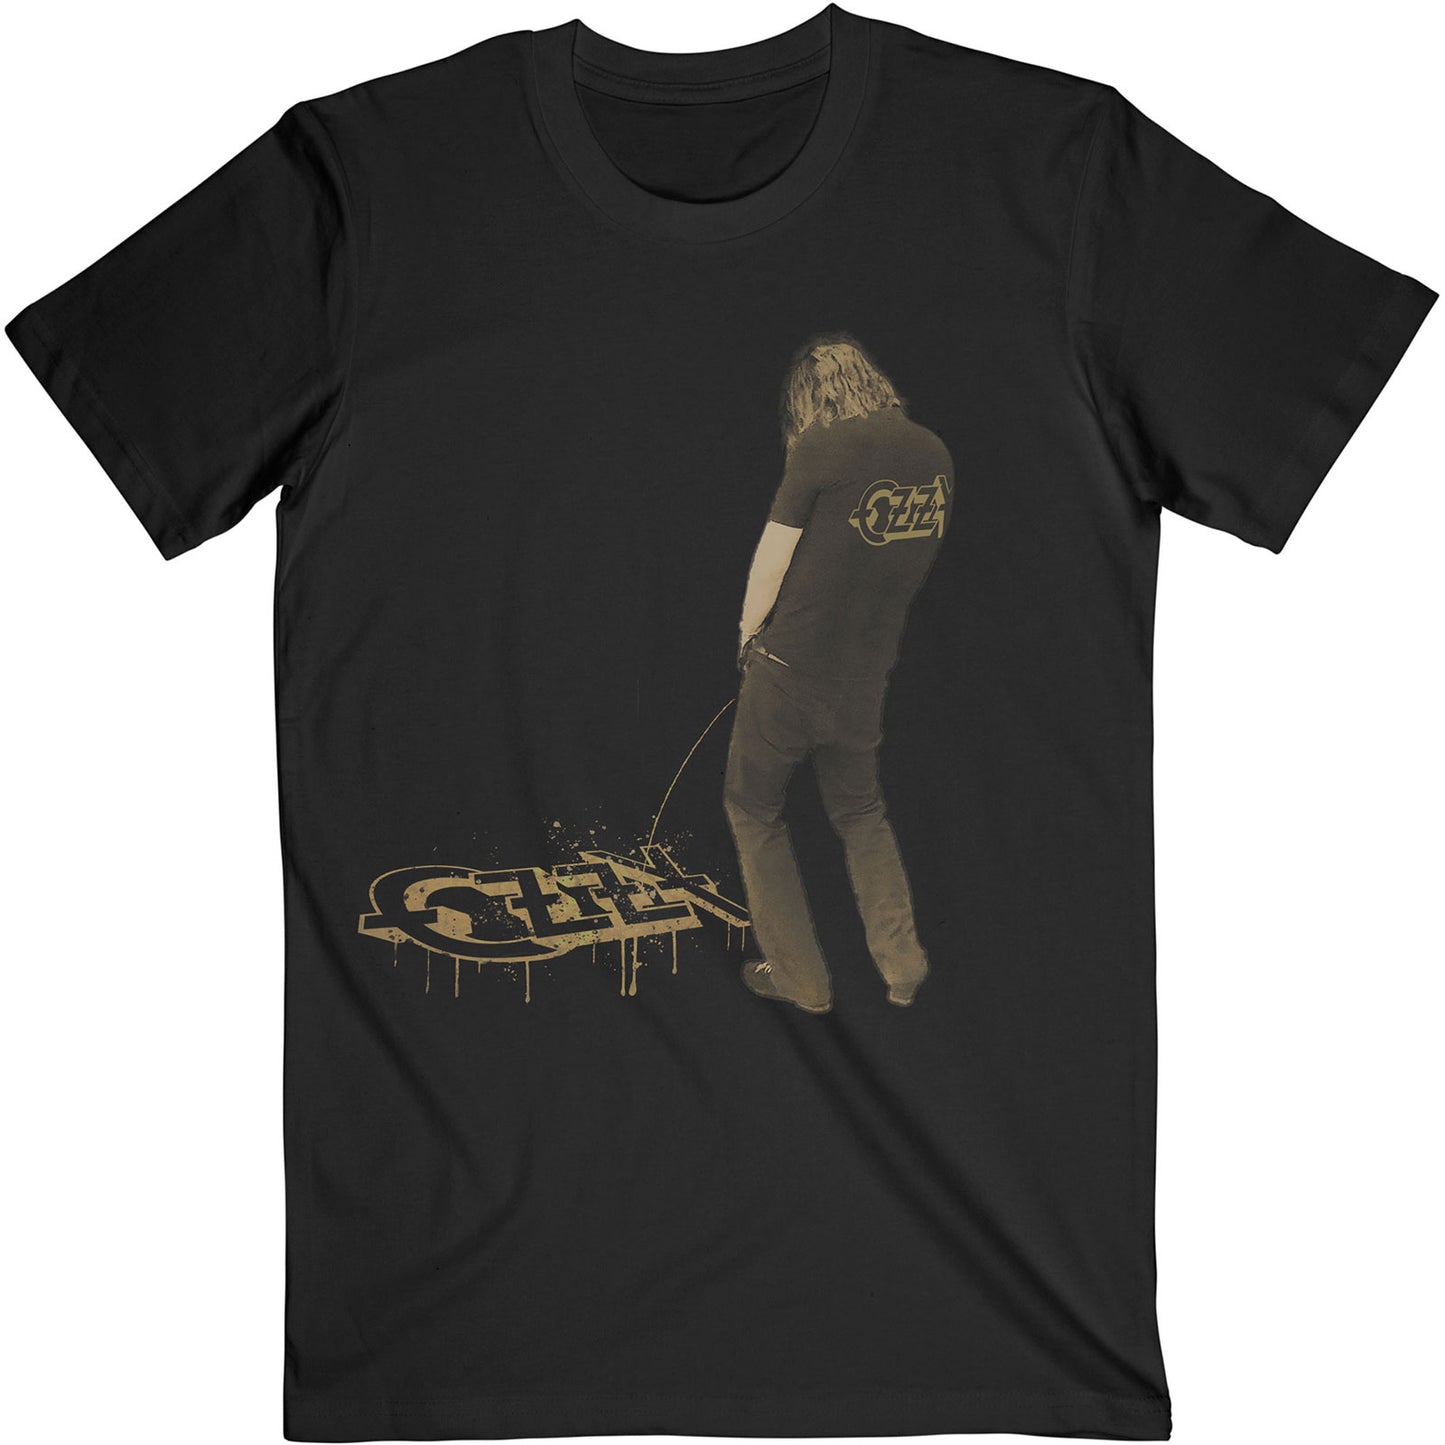 Ozzy Osbourne T-Shirt: Perfectly Ordinary Leak